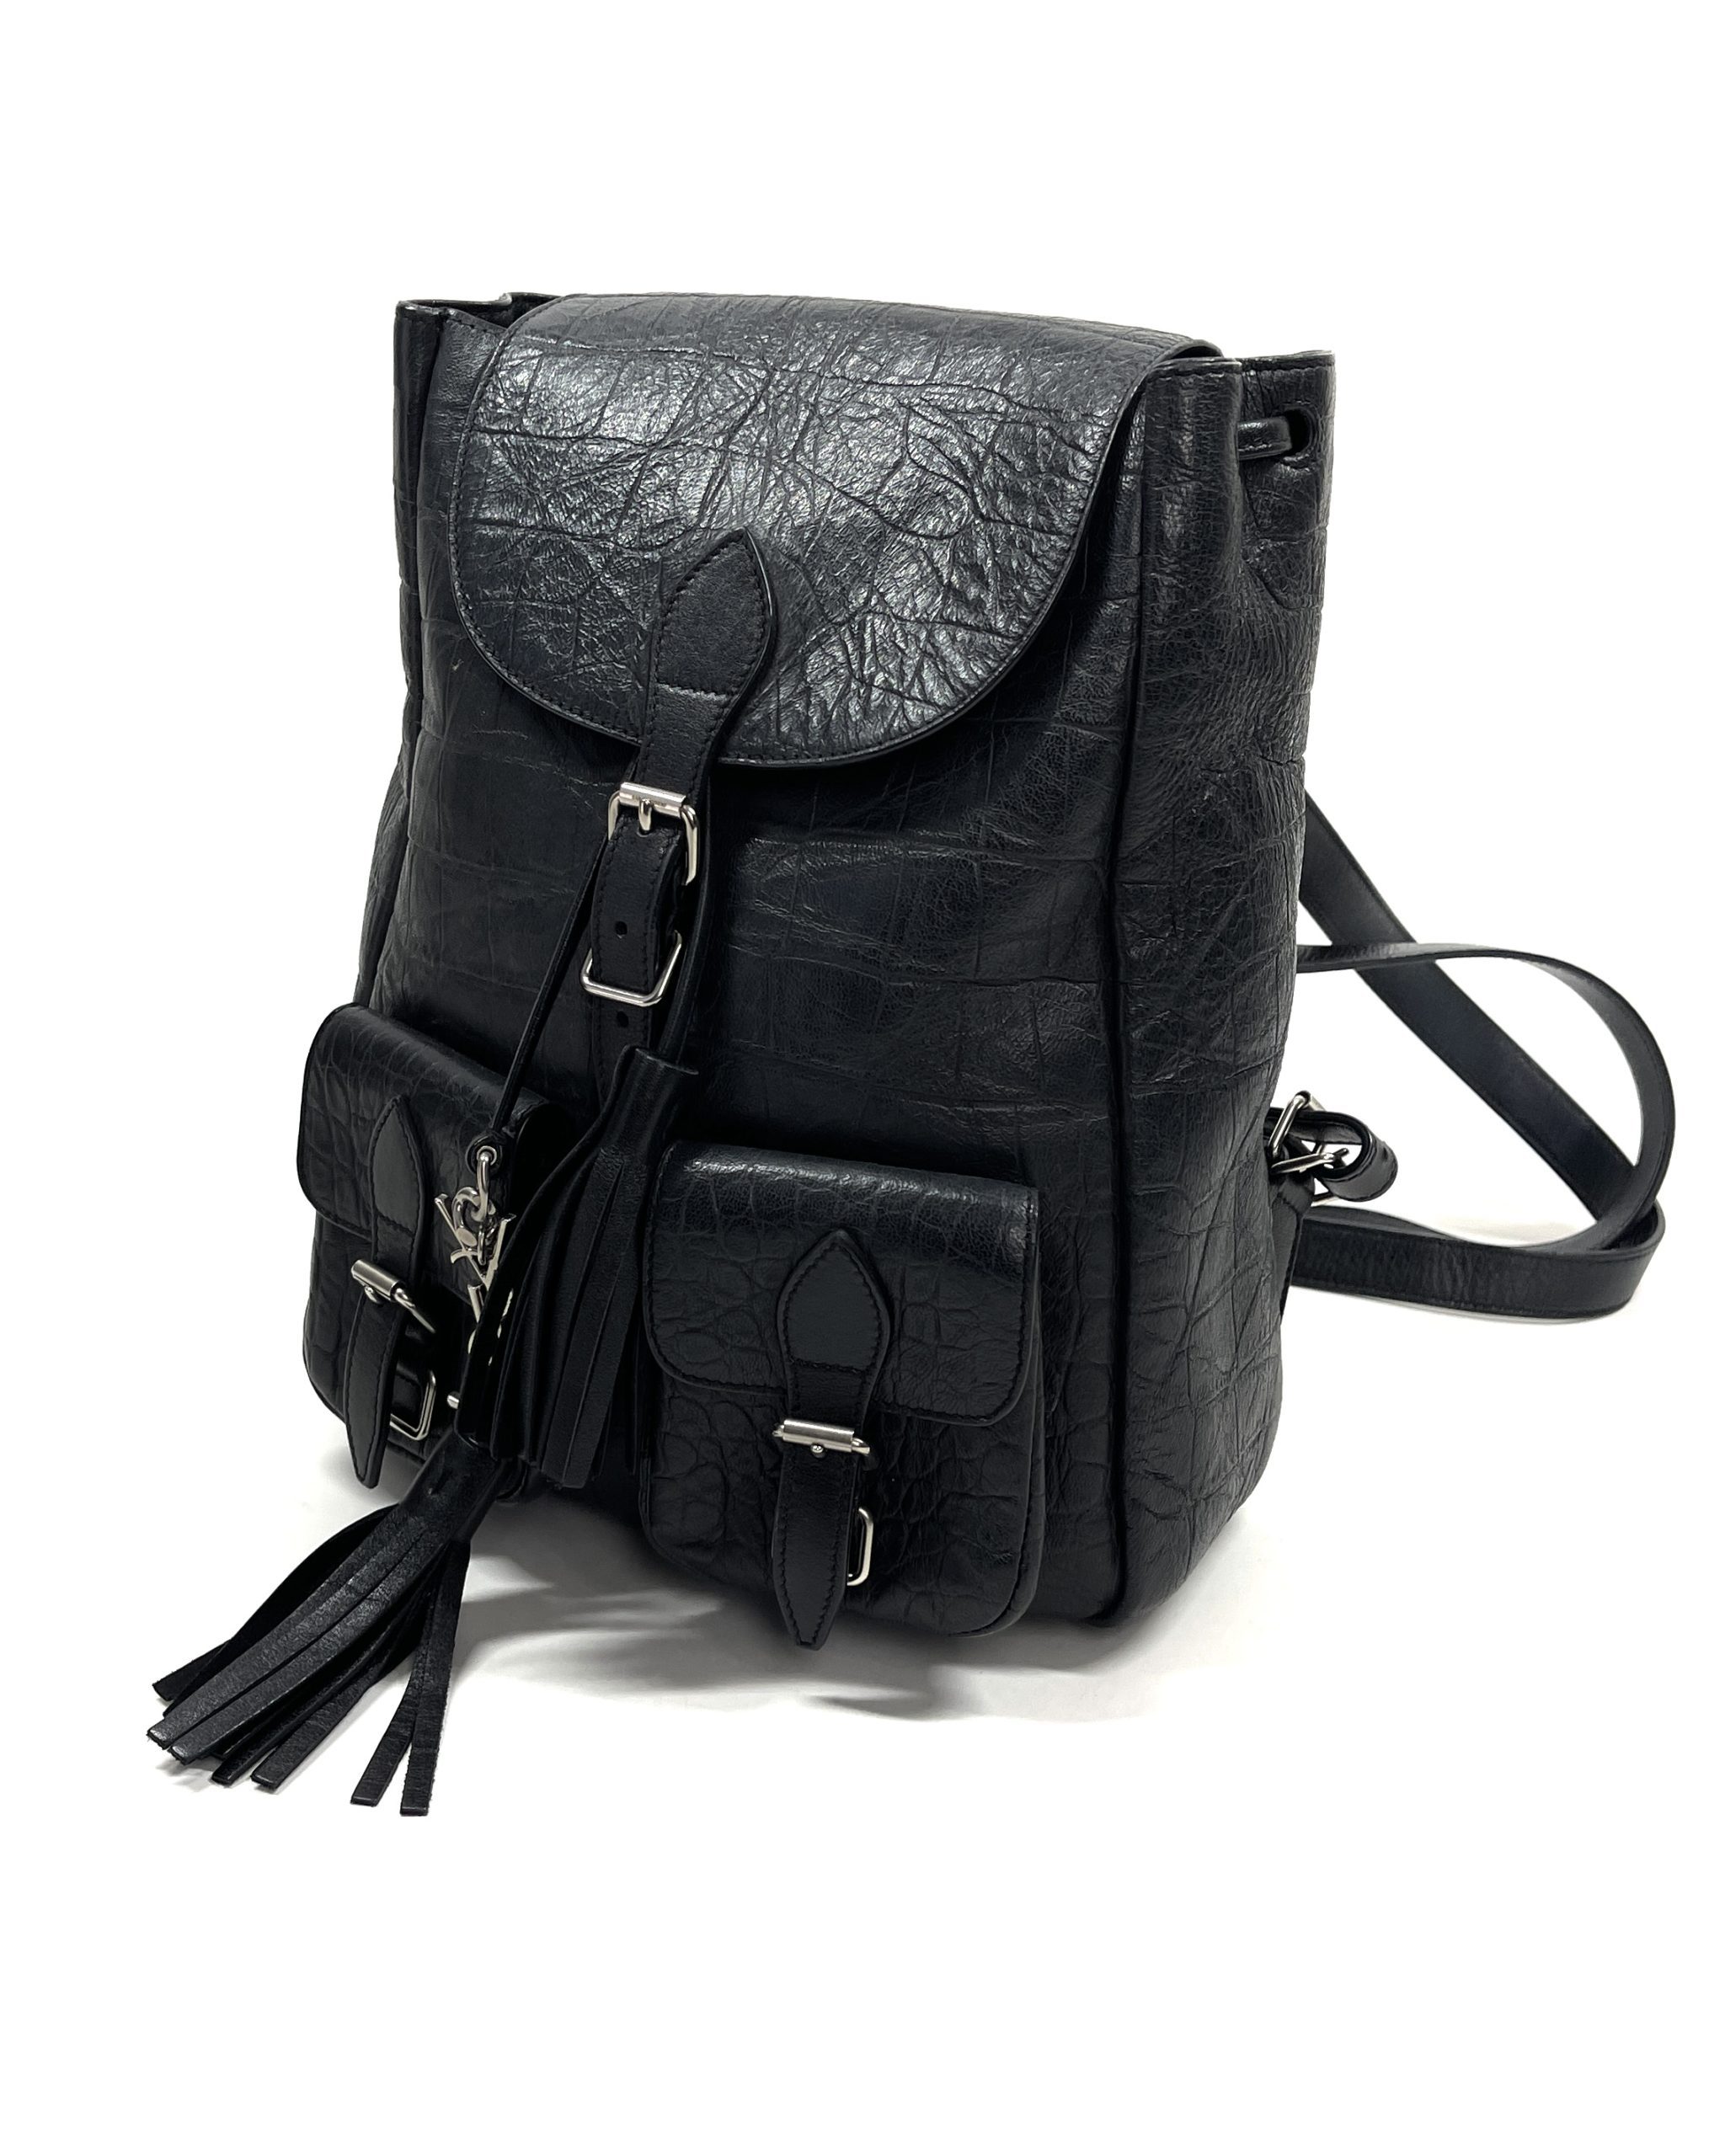 Lancel Paris Black Leather Elsa Mini Backpack